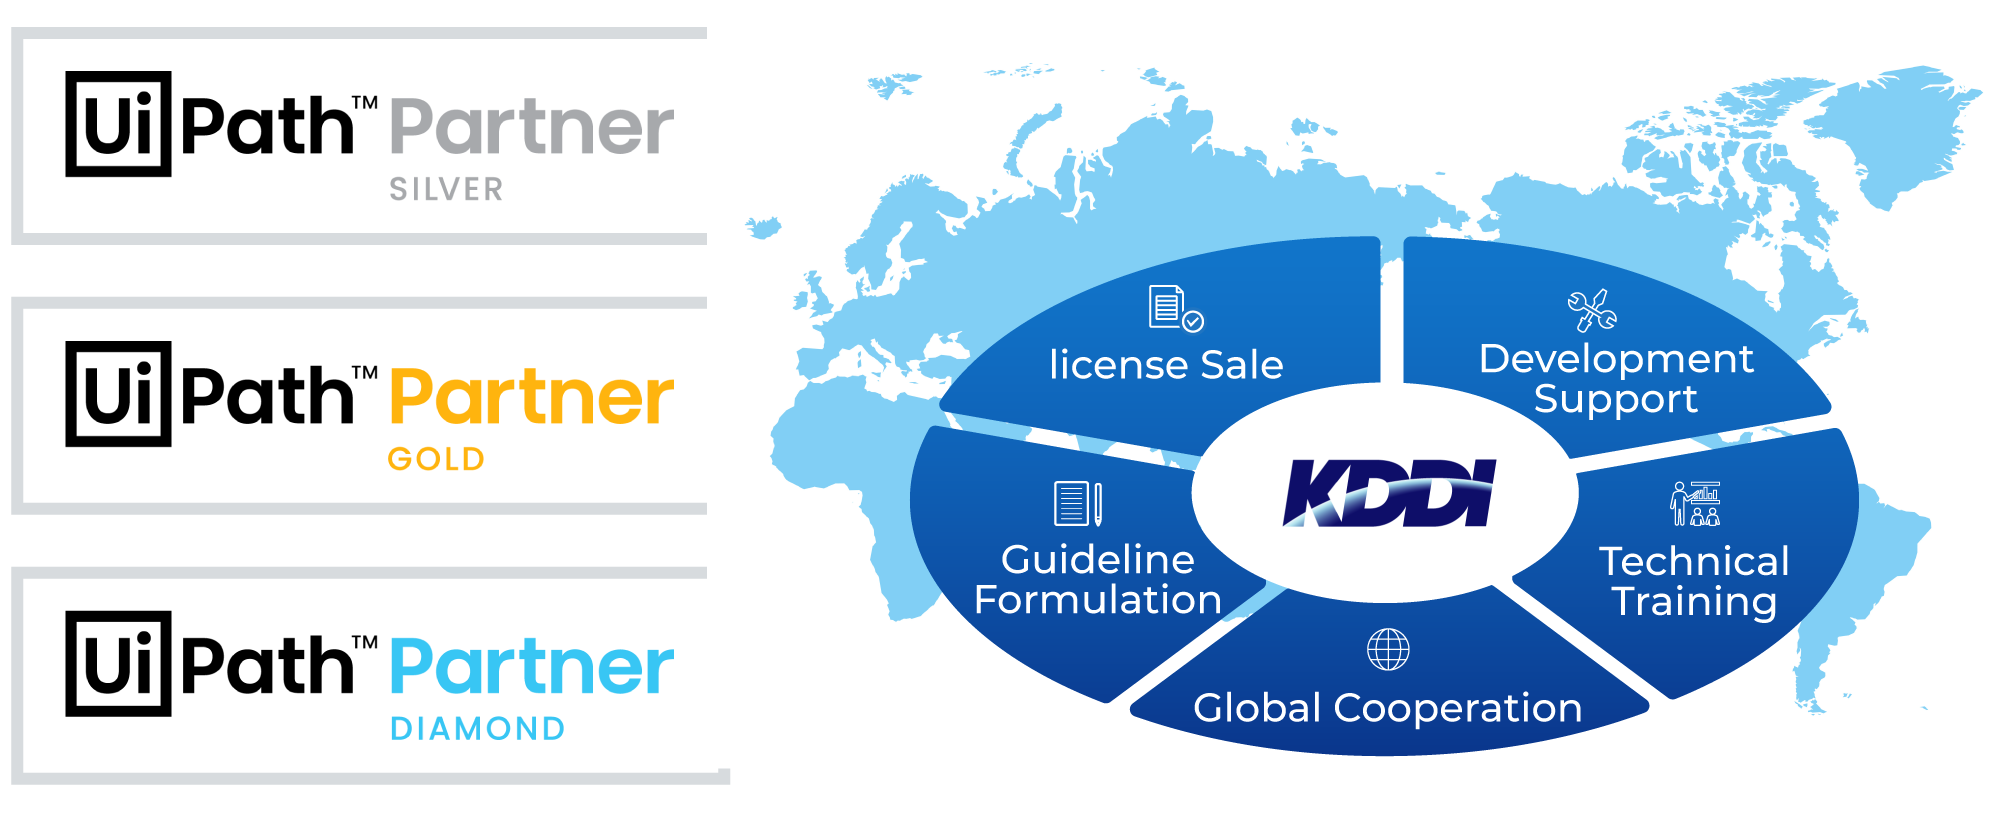 license sale, Guideline Formulation, Global Cooperation, Technical Training, Development Support